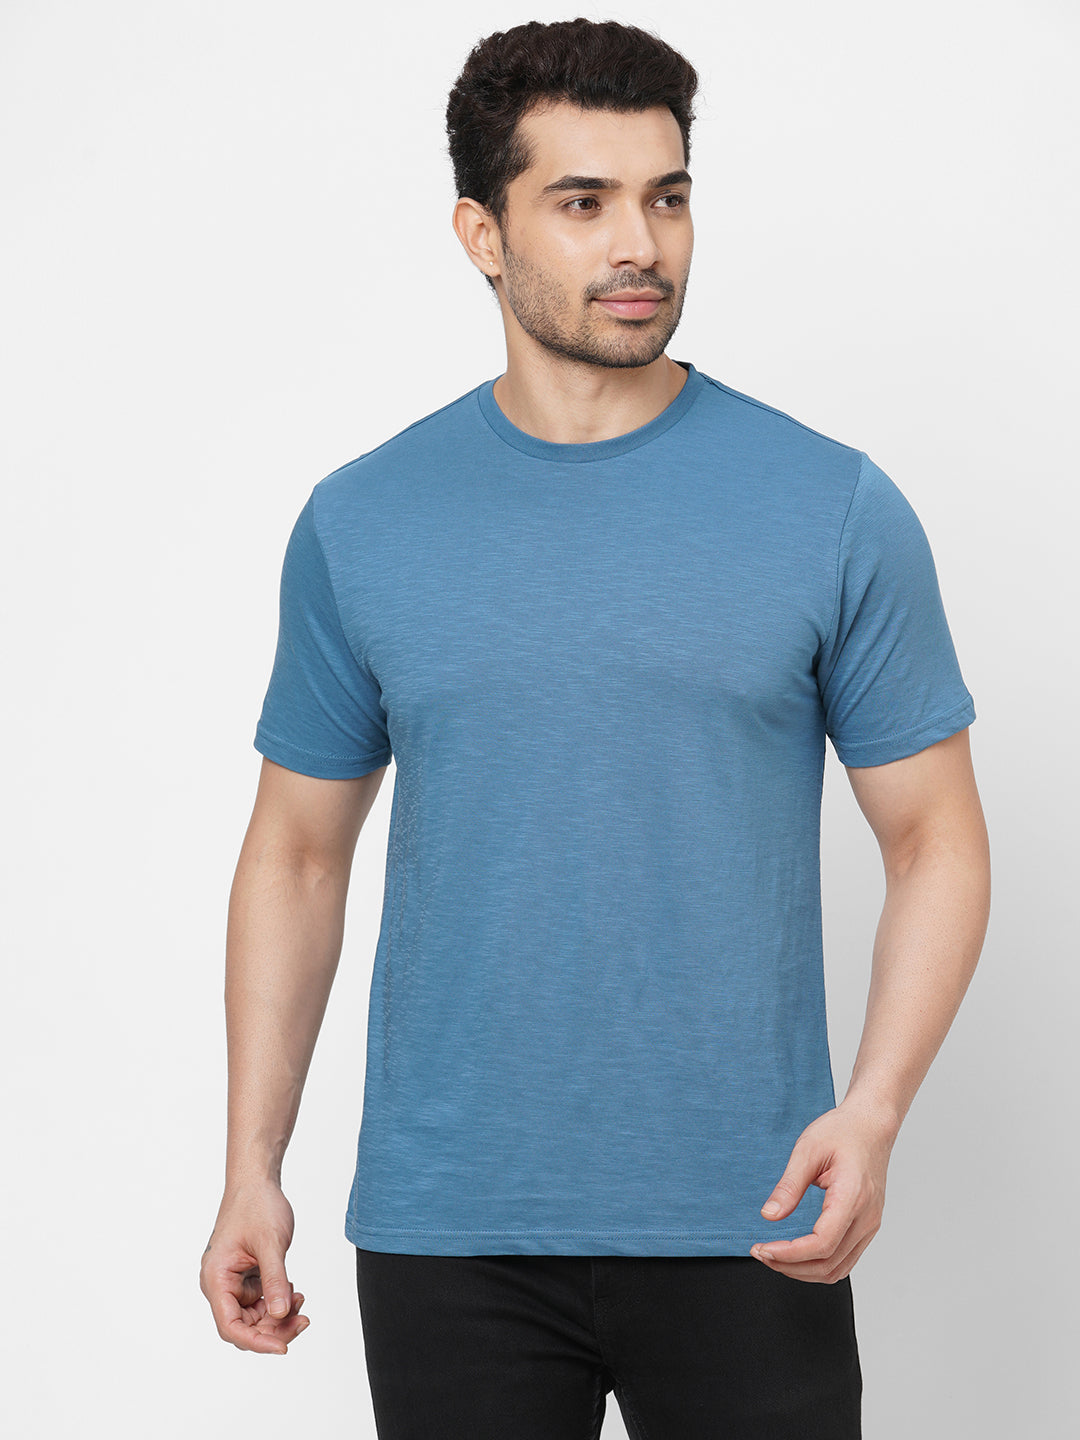 Men's Cotton Lblue Regular Fit Tshirt